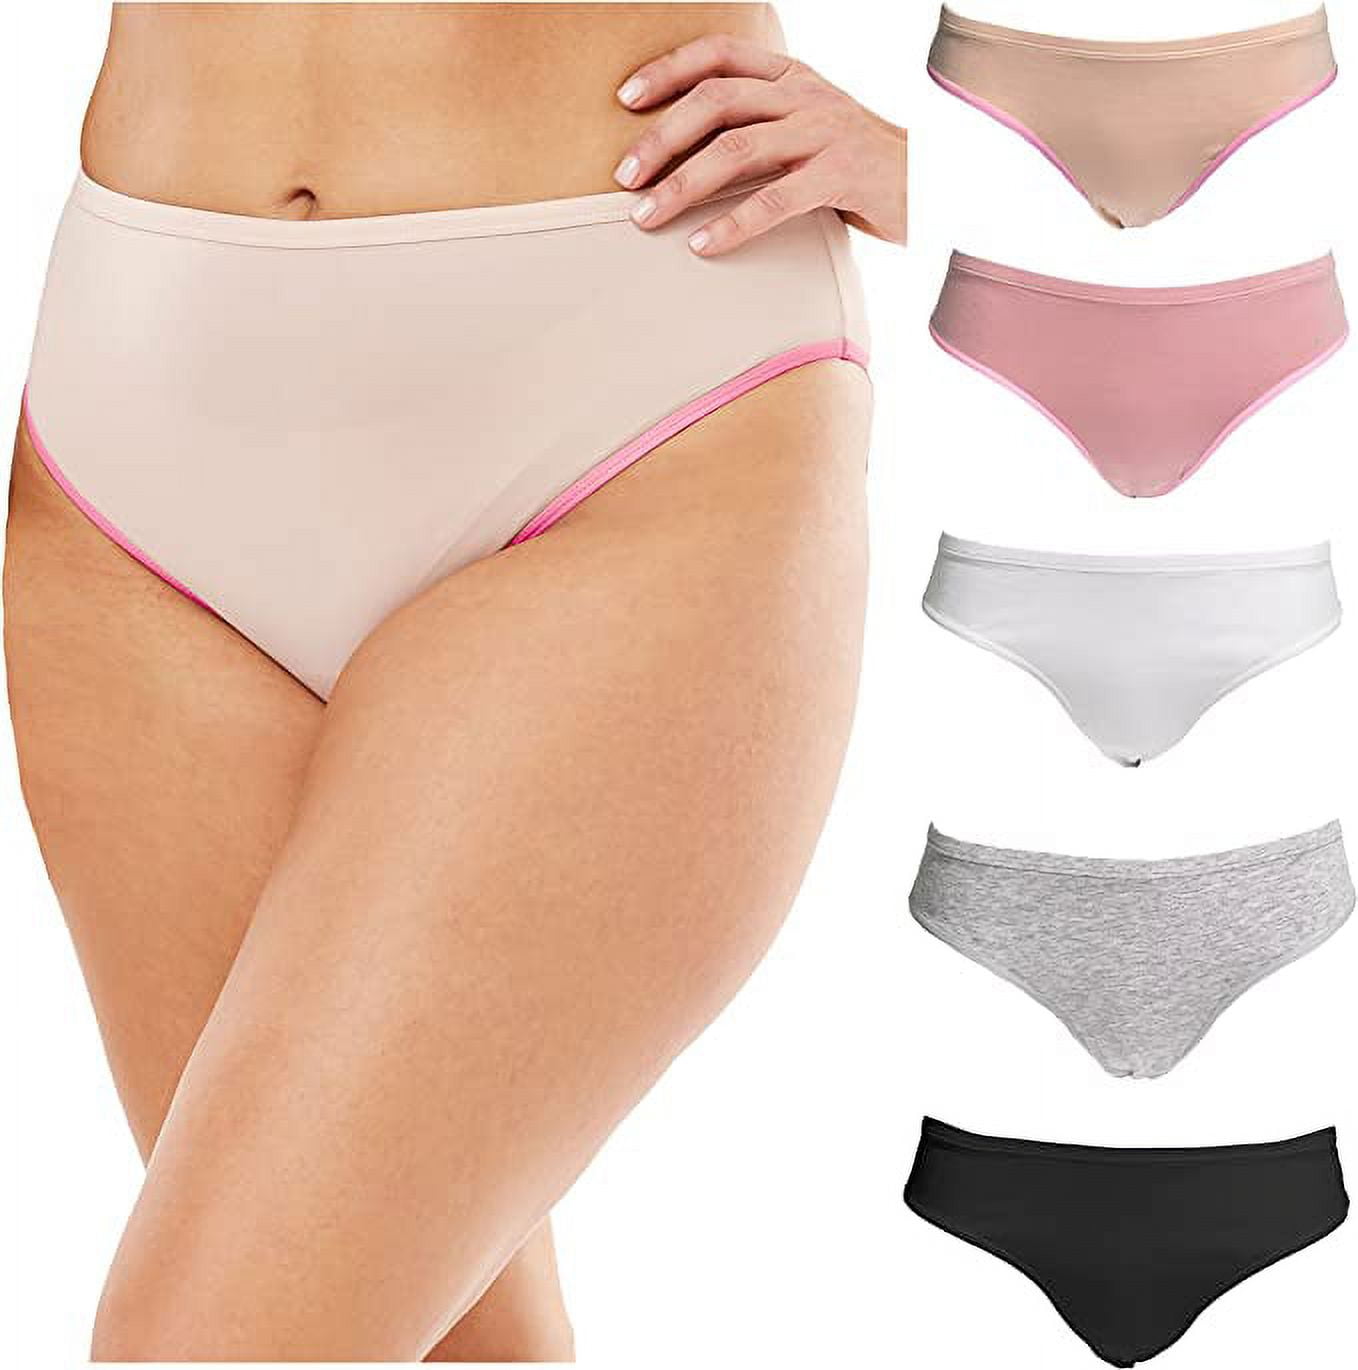 Emprella Womens Plus Size Bikini Brief Panties - 5 Pack 